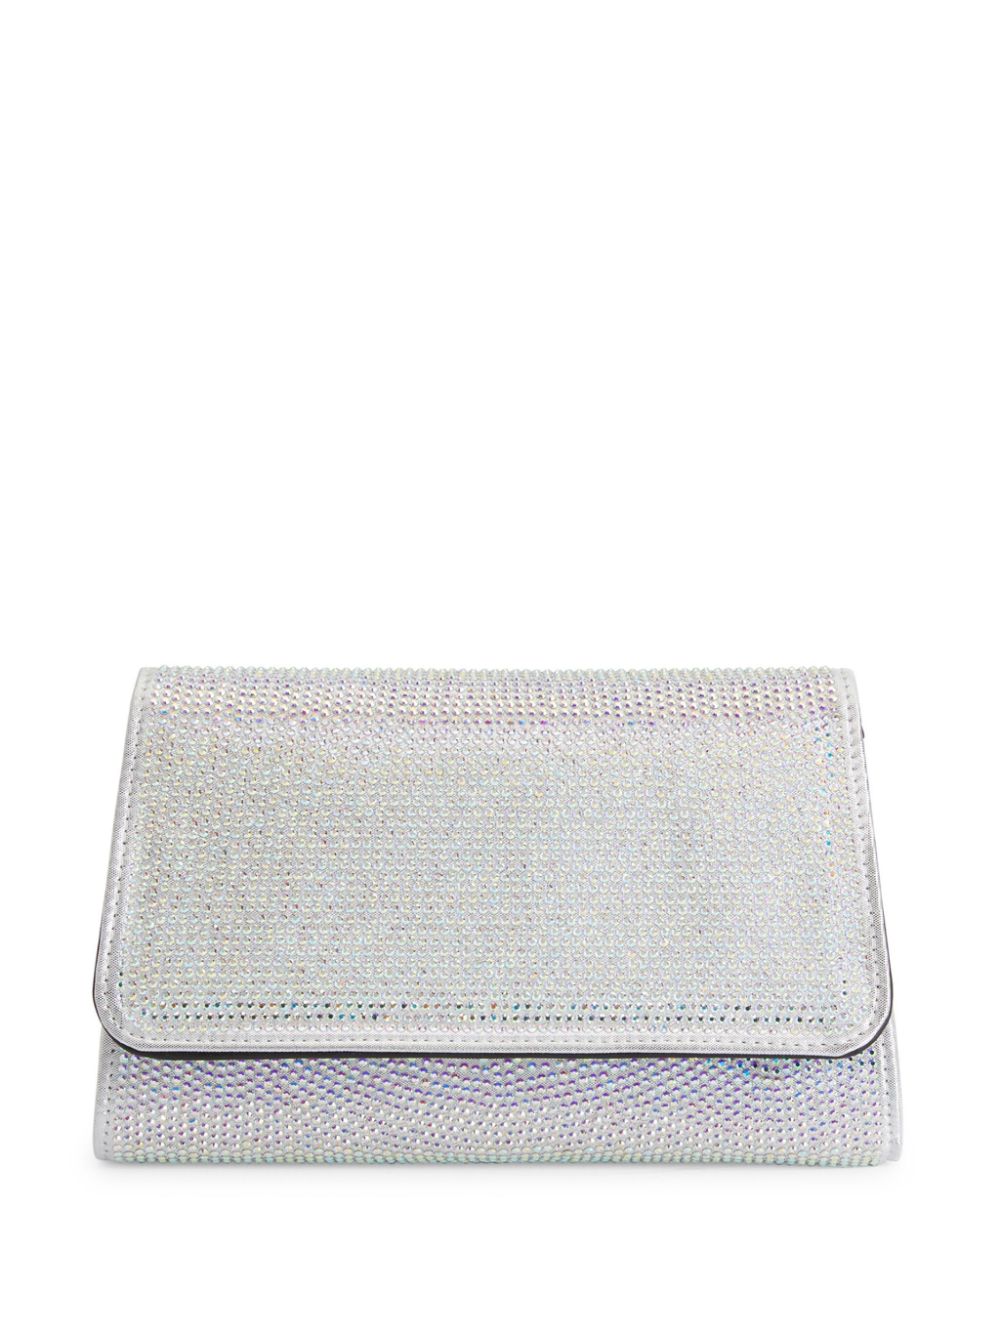 Giuseppe Zanotti Idha Crystal-embellished Clutch Bag In Silver